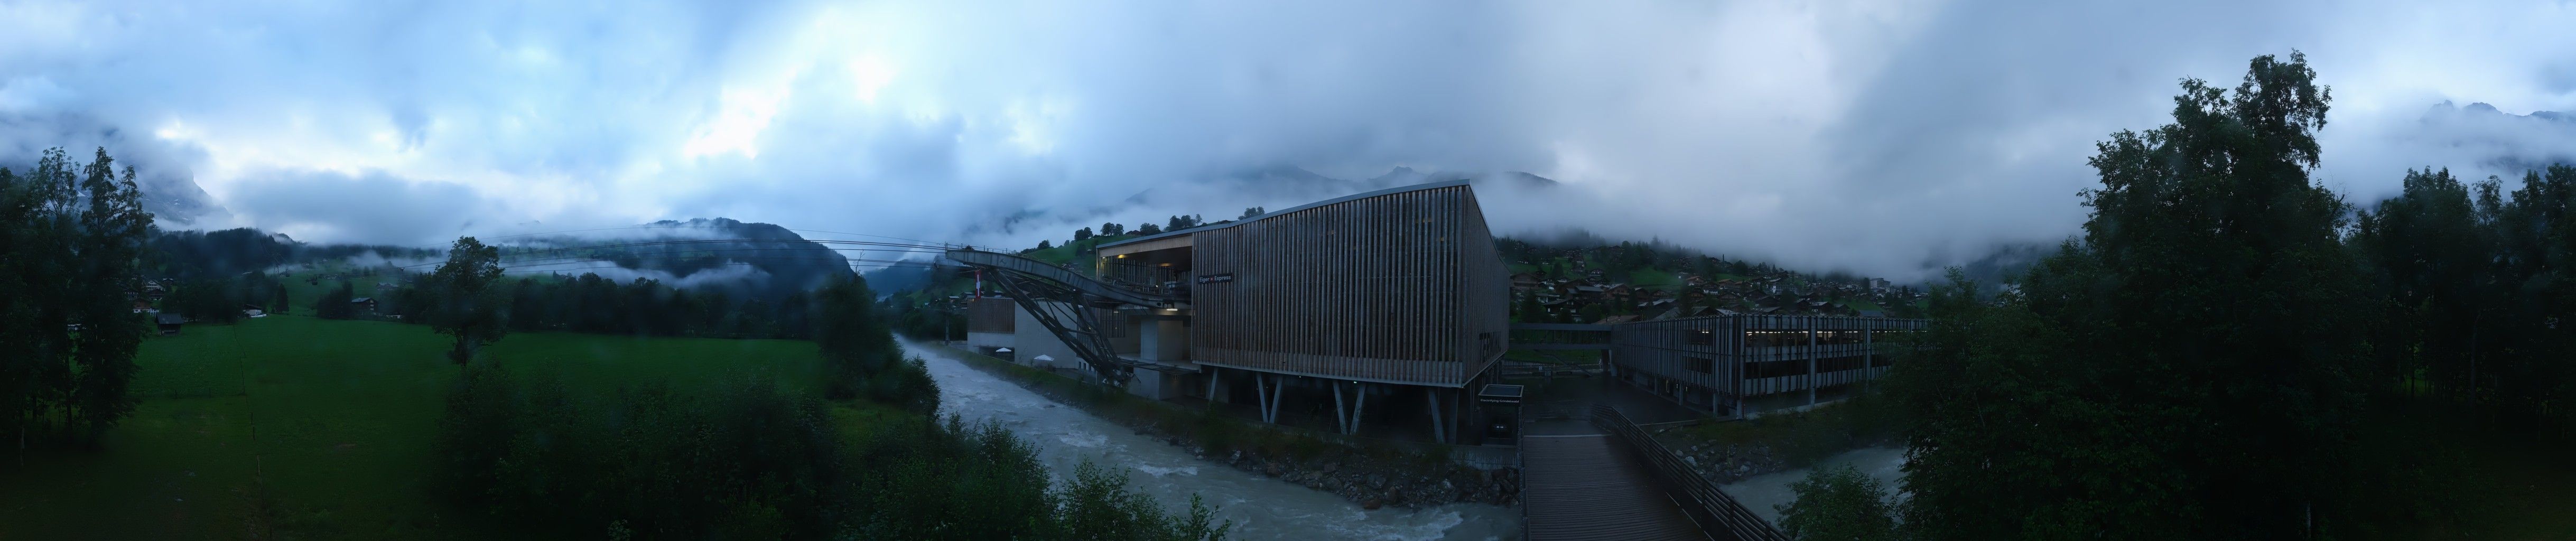 Grindelwald: Terminal